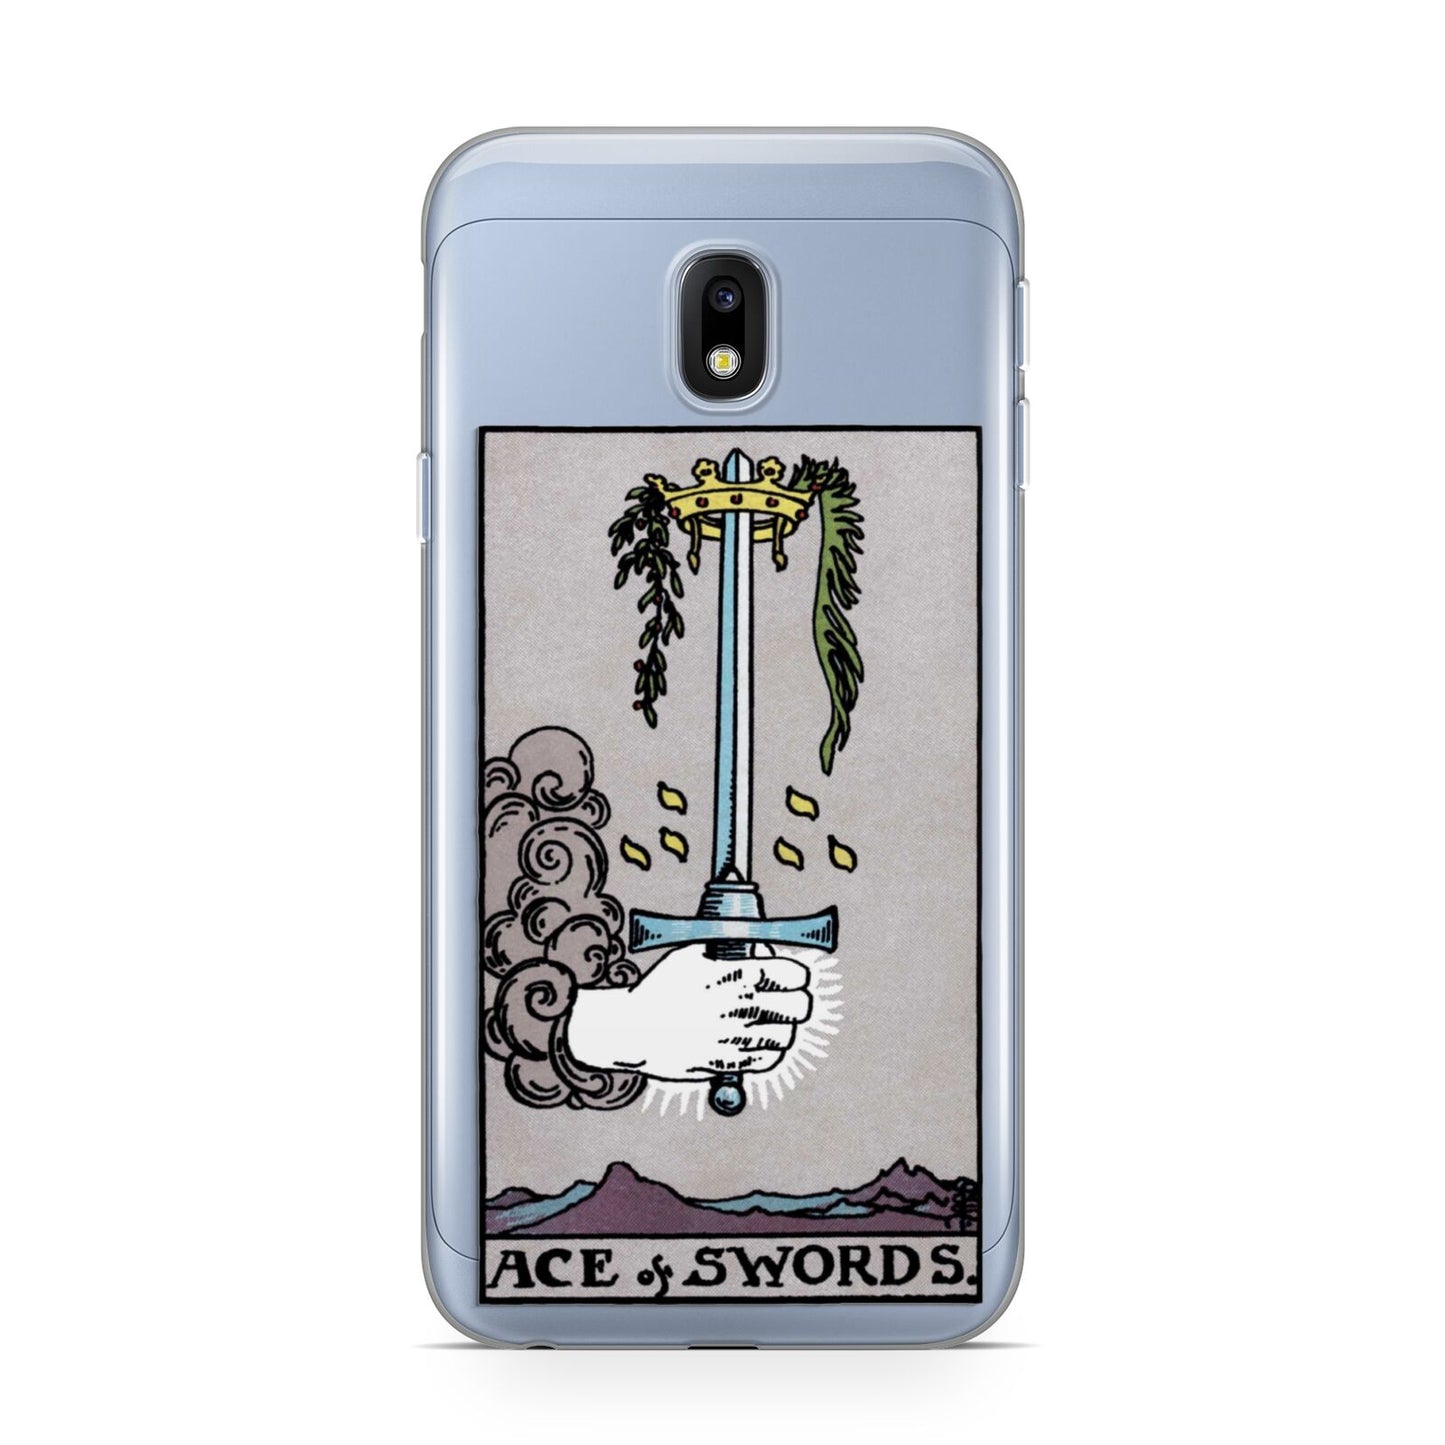 Ace of Swords Tarot Card Samsung Galaxy J3 2017 Case